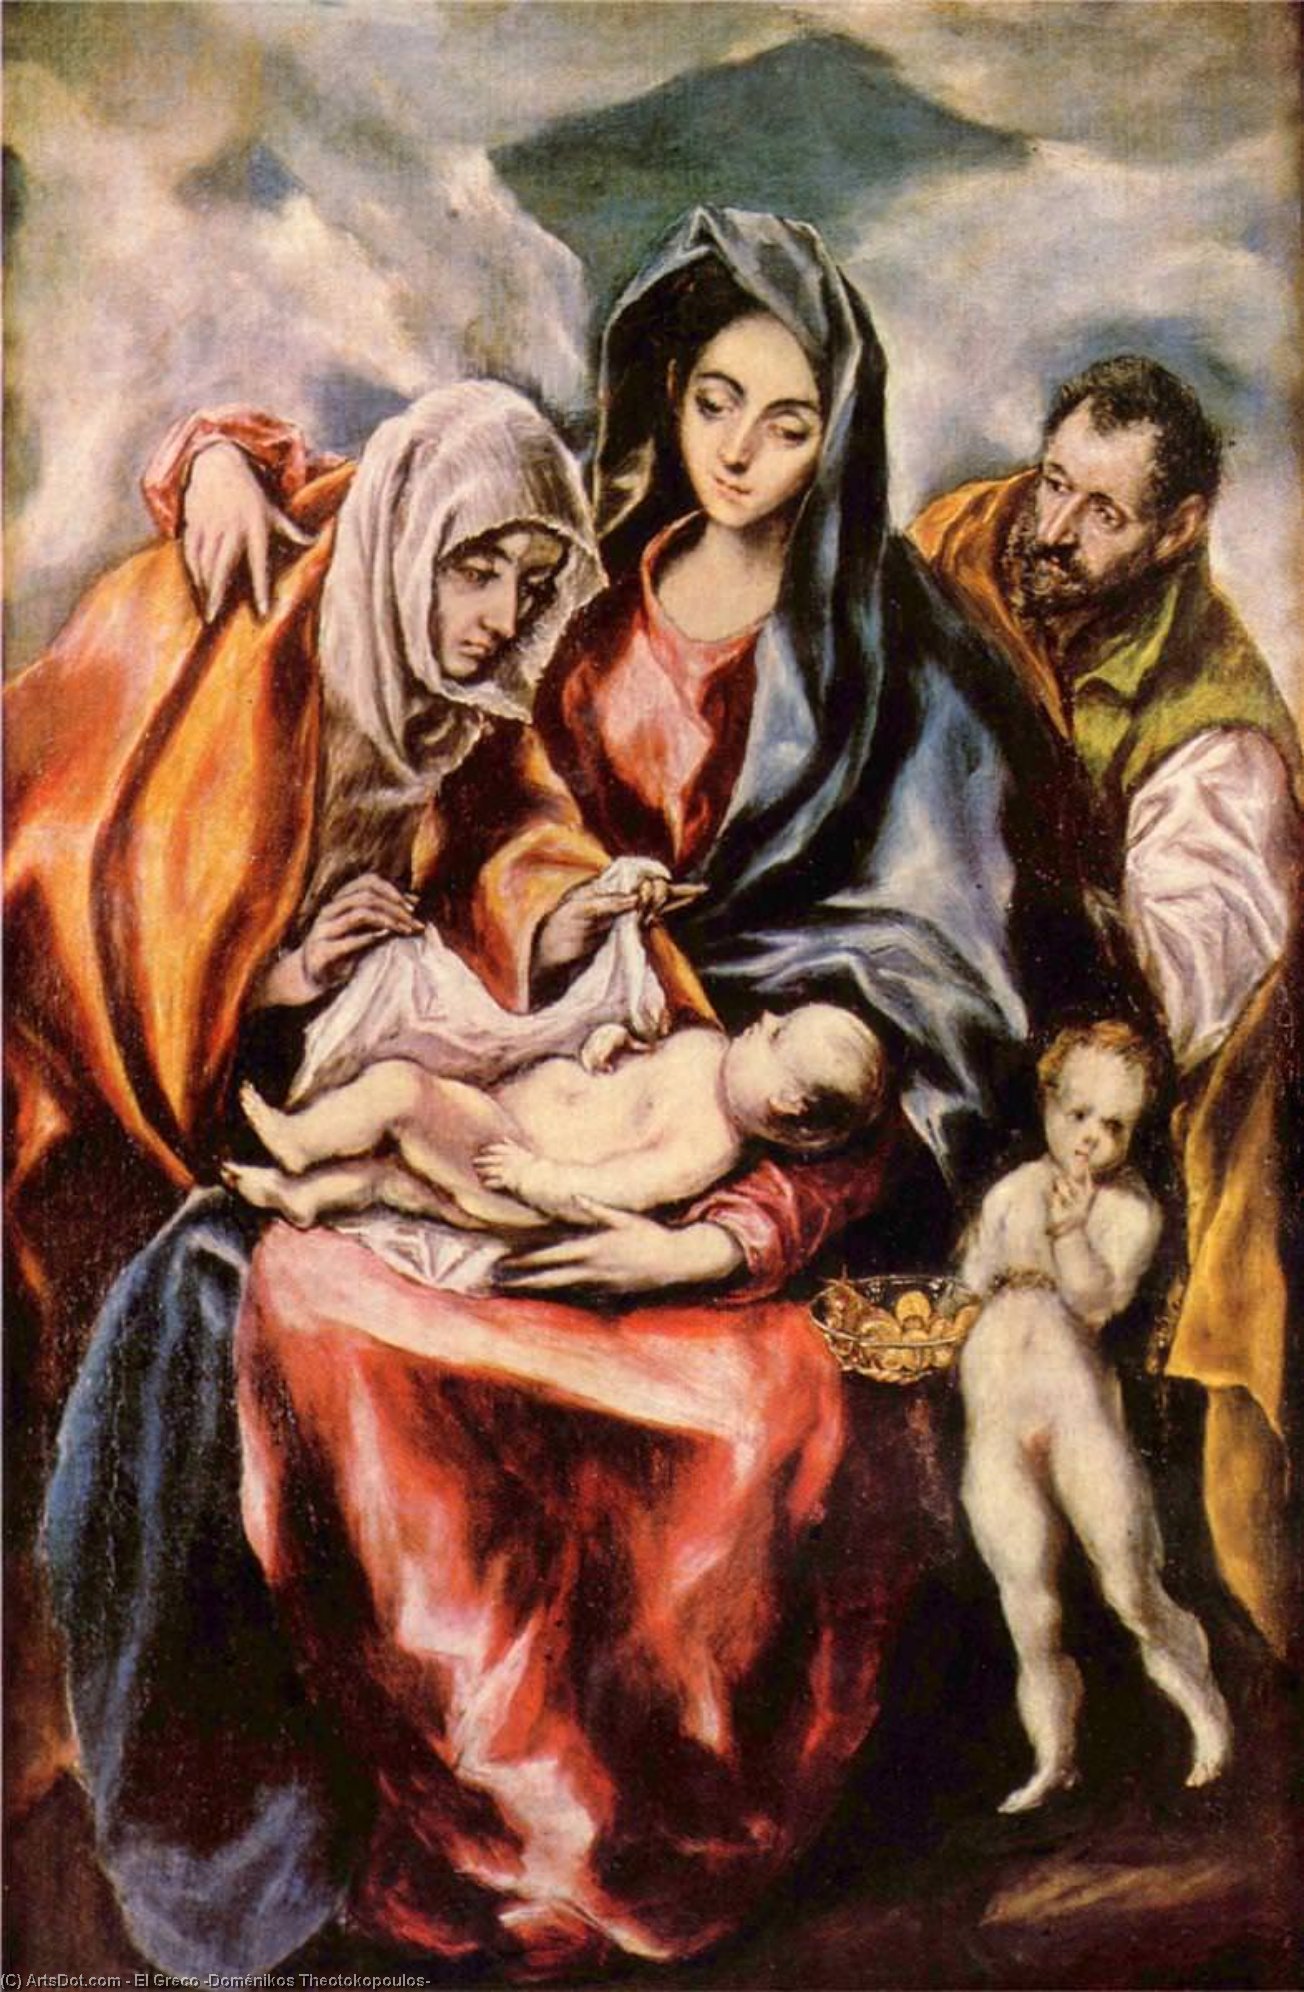 WikiOO.org - אנציקלופדיה לאמנויות יפות - ציור, יצירות אמנות El Greco (Doménikos Theotokopoulos) - The Holy Family with St. Anne and the Young St. John the Baptist